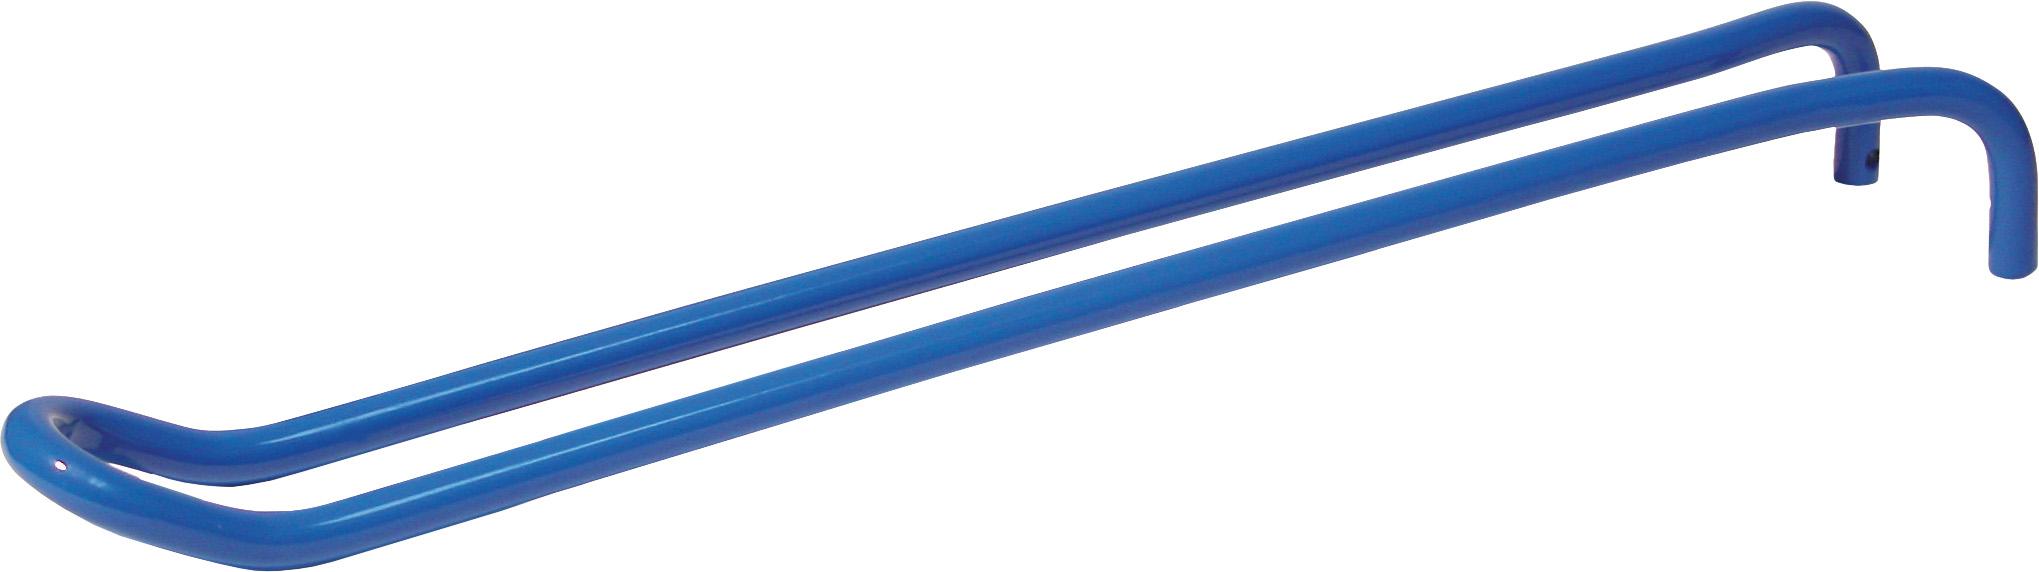 Park Tool Paper Towel Holder (pth-1)  Blue